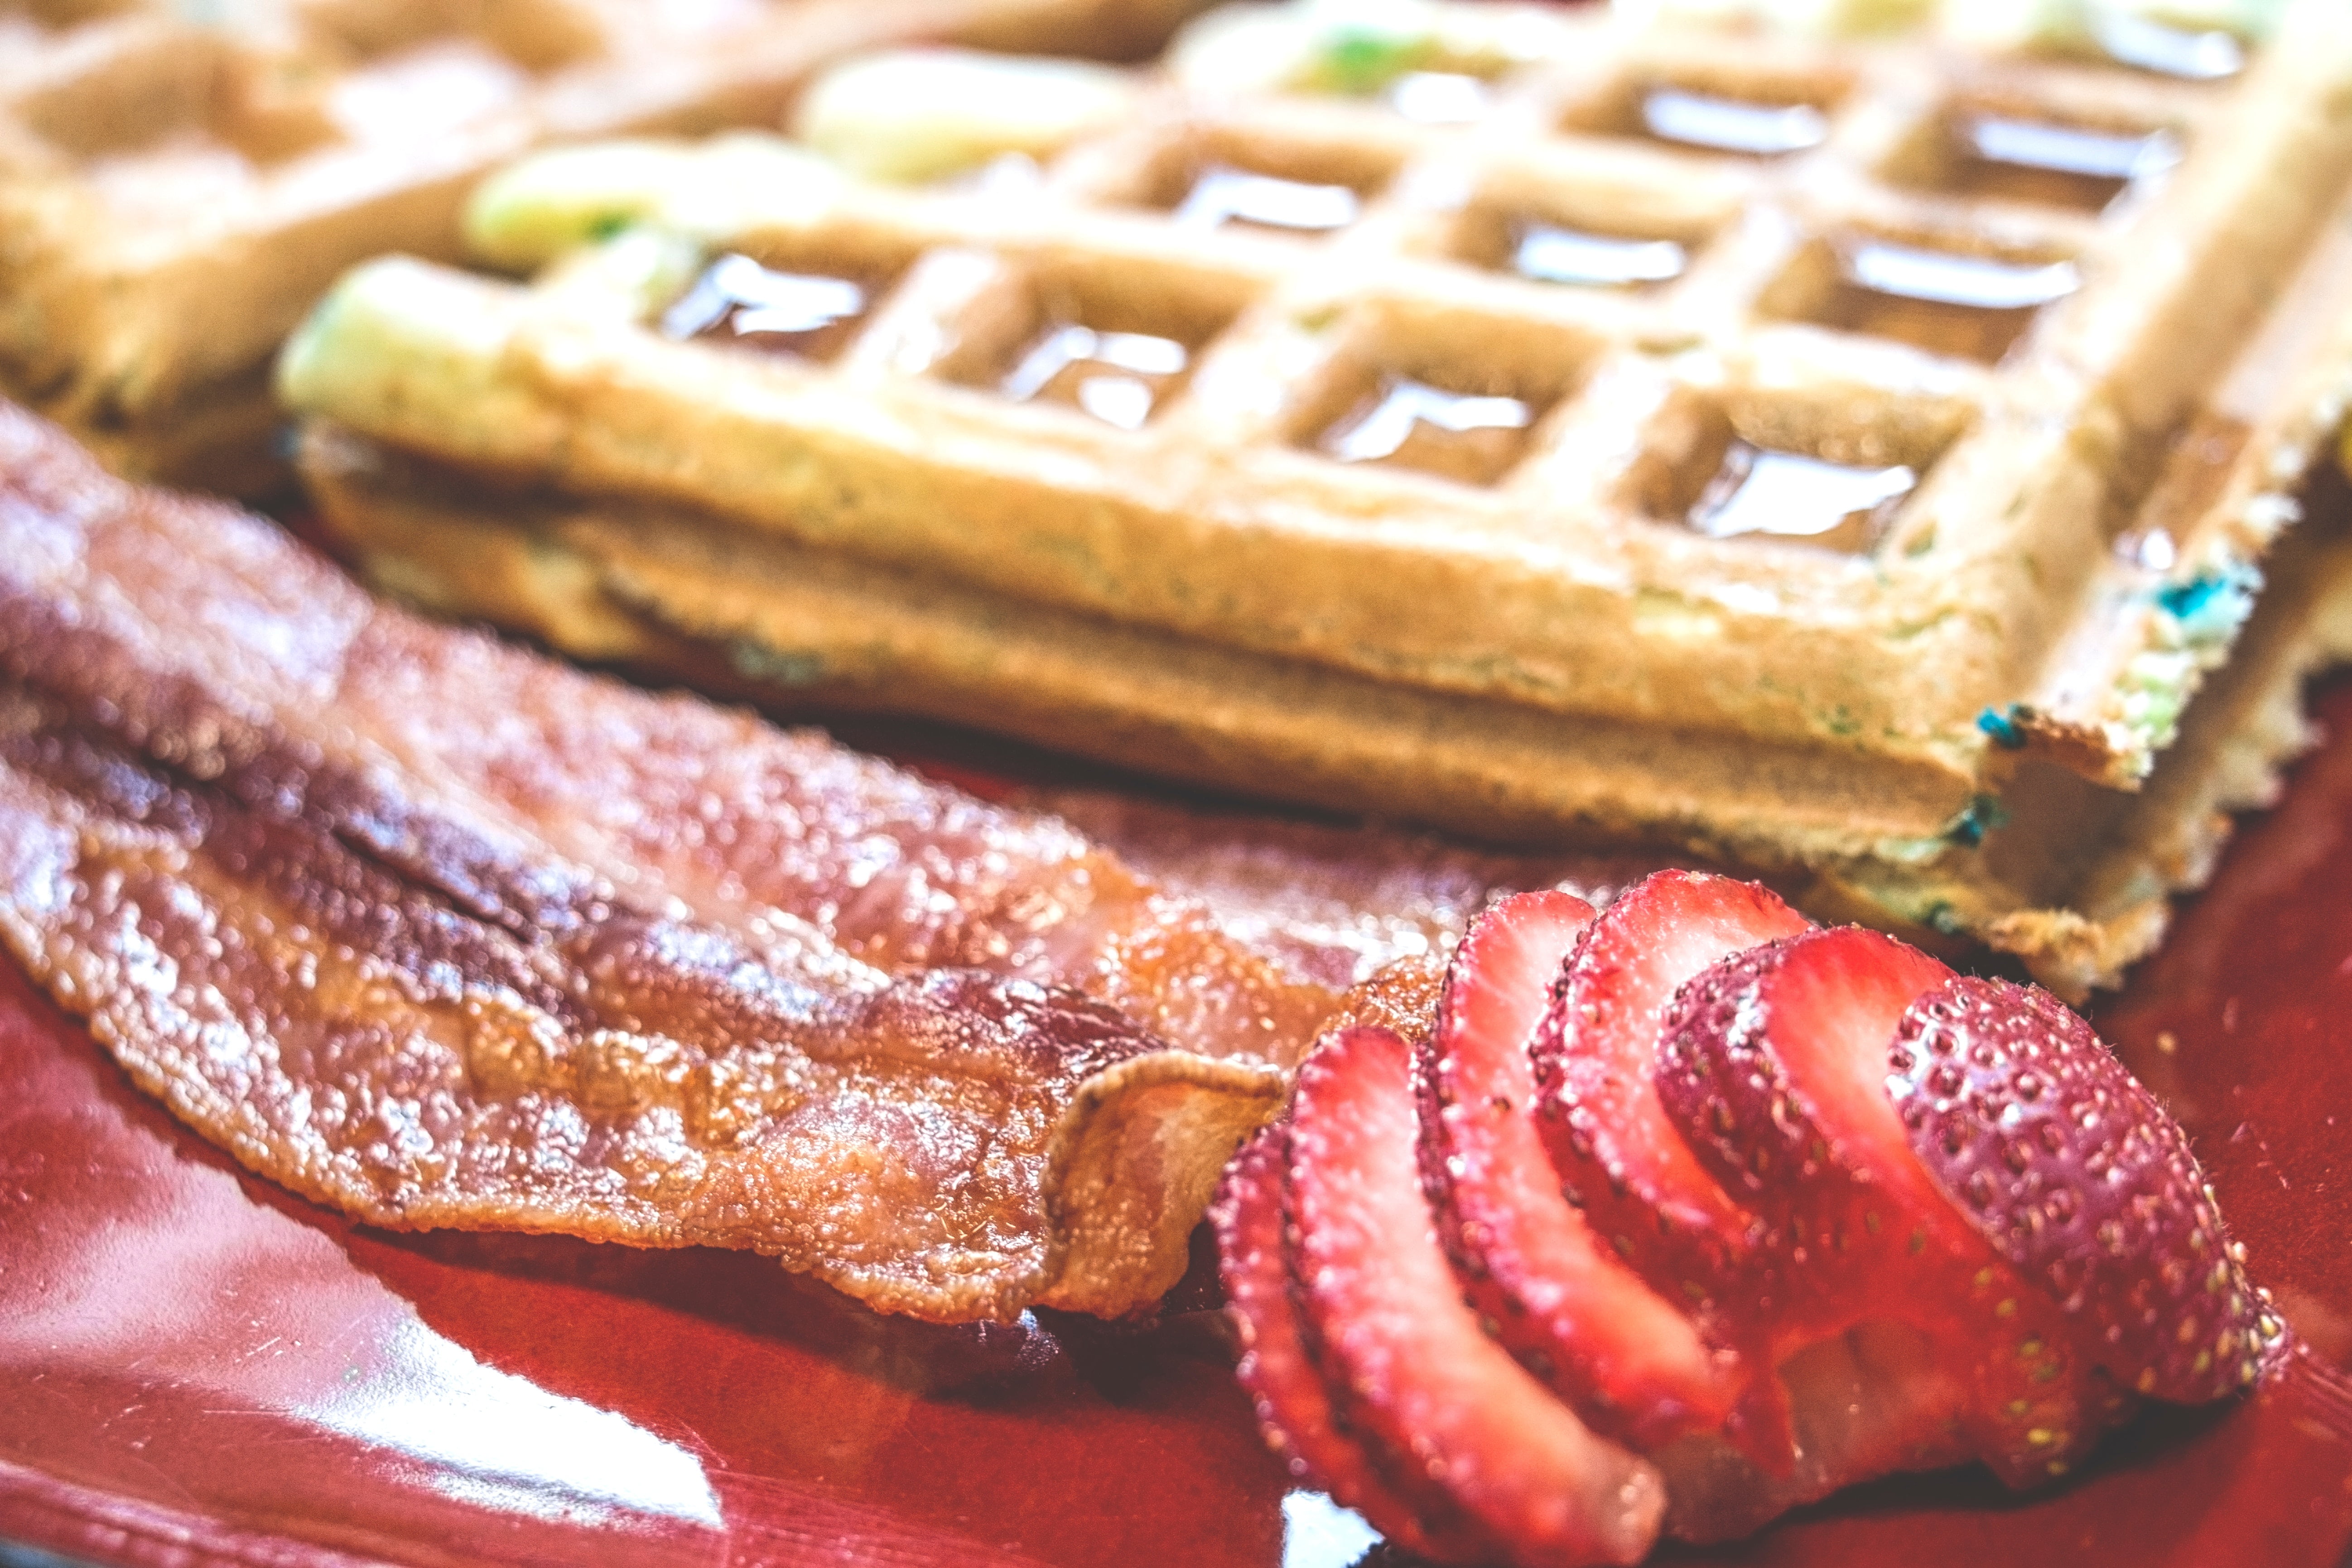 sliced strawberry, wafers, strawberries, bacon, breakfast, food